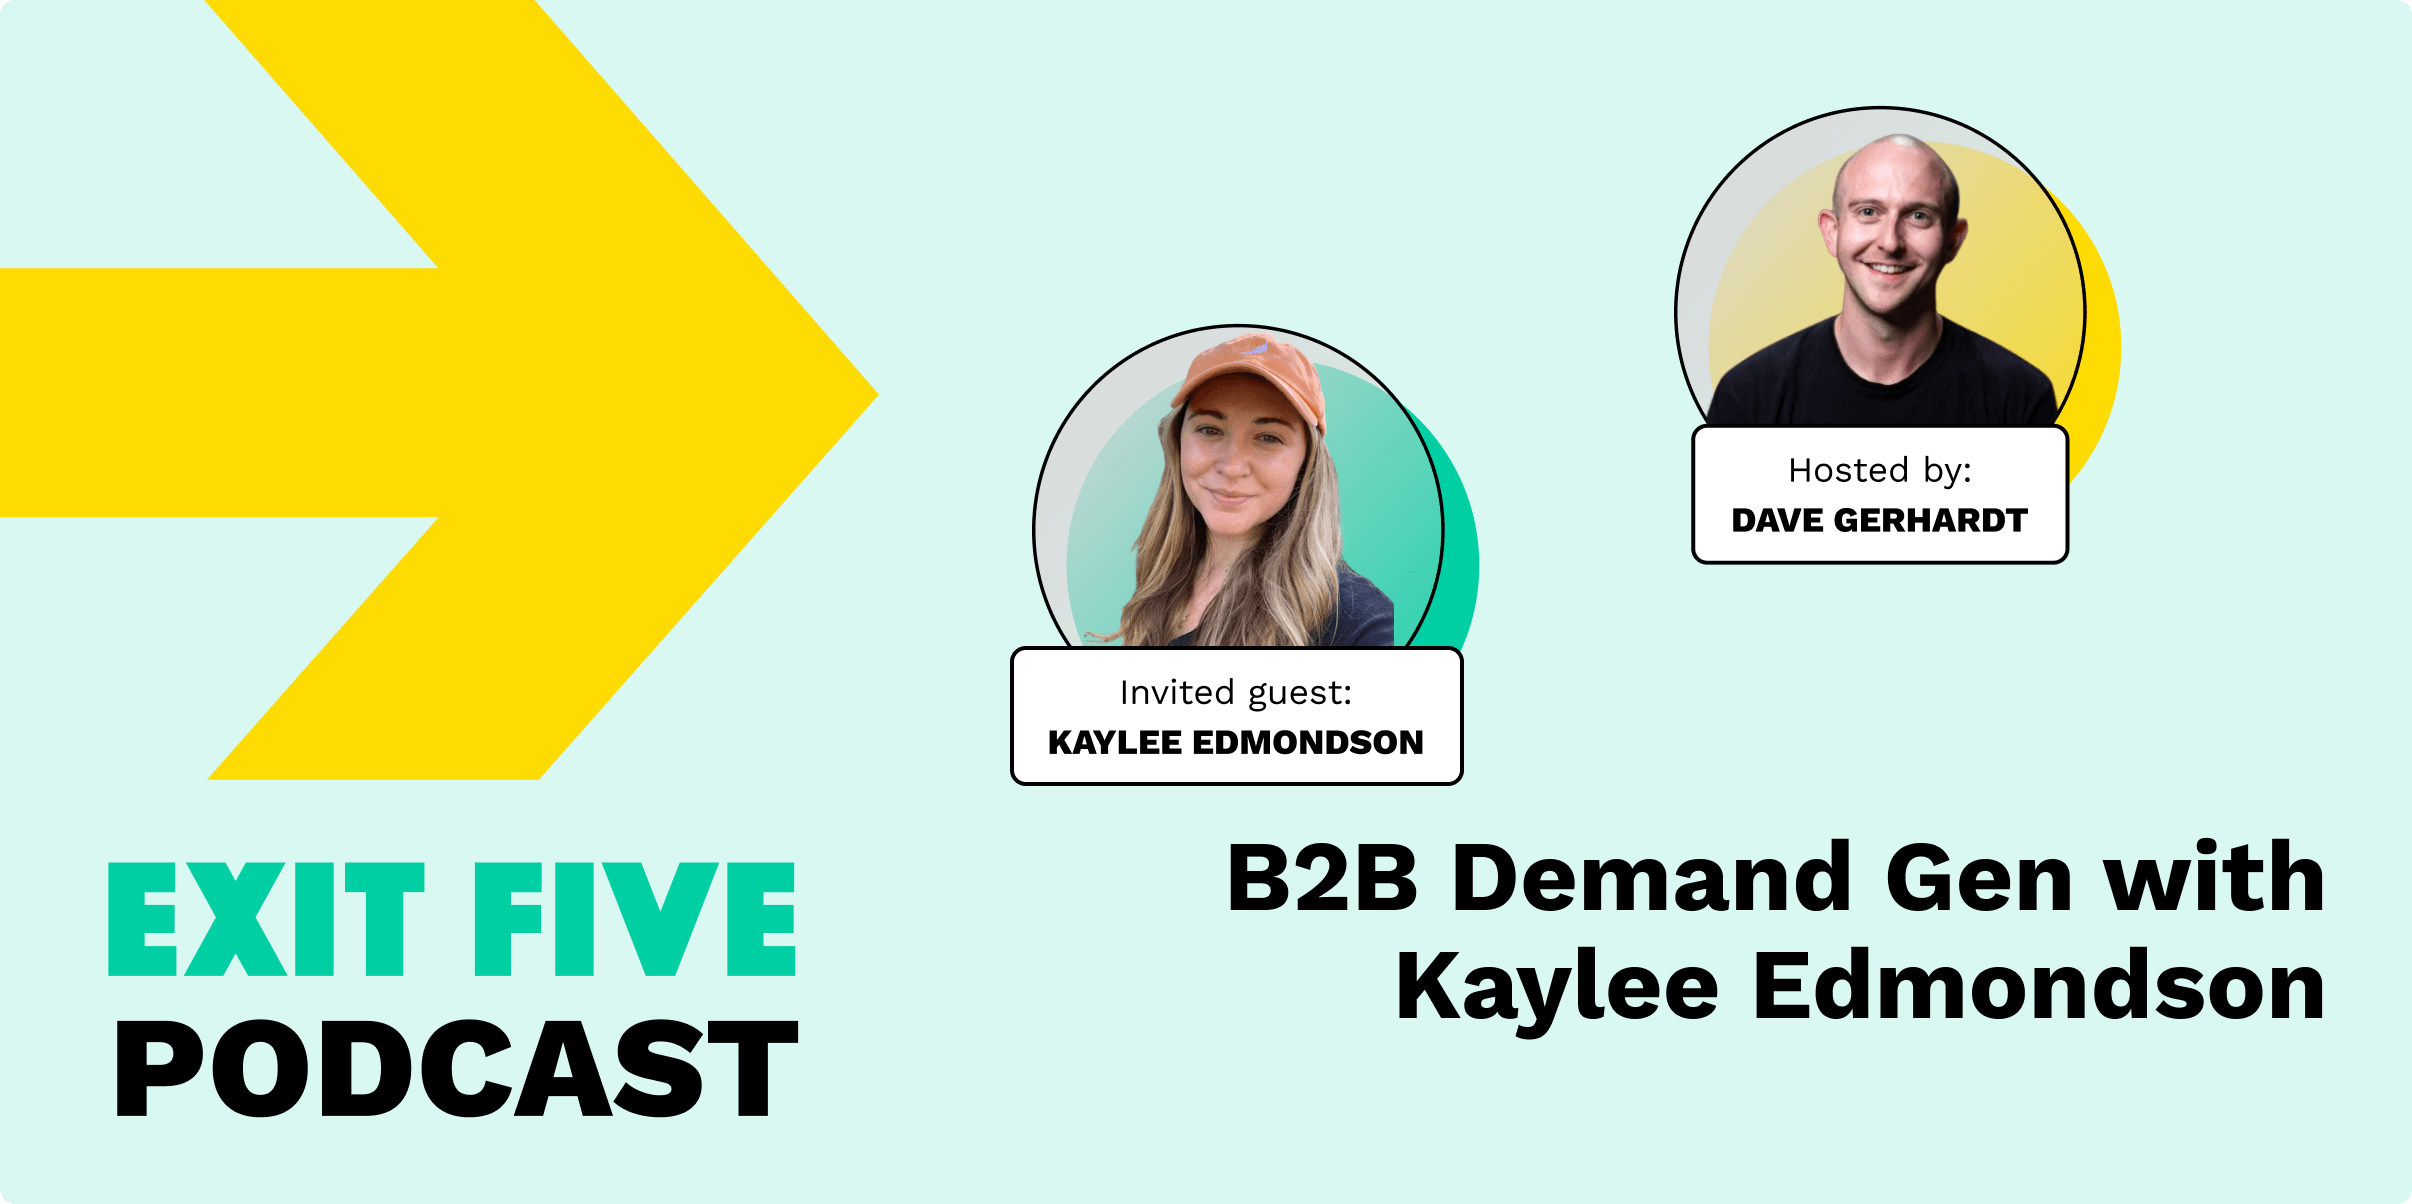 B2B Demand Gen with Kaylee Edmondson...